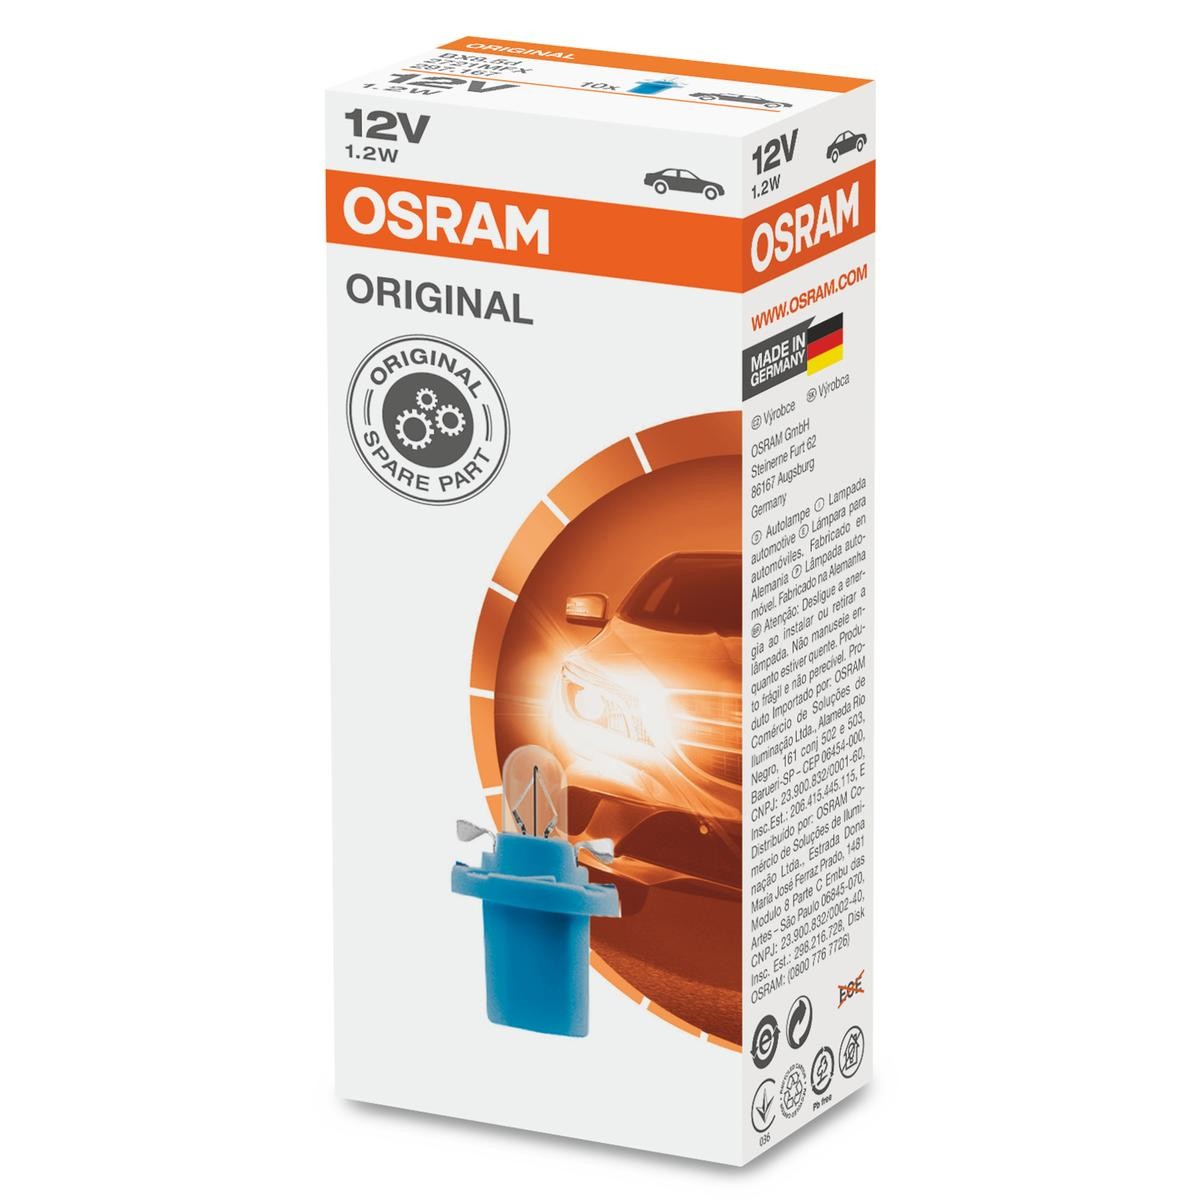 Original 2721MFX OSRAM Interior lights experience and price